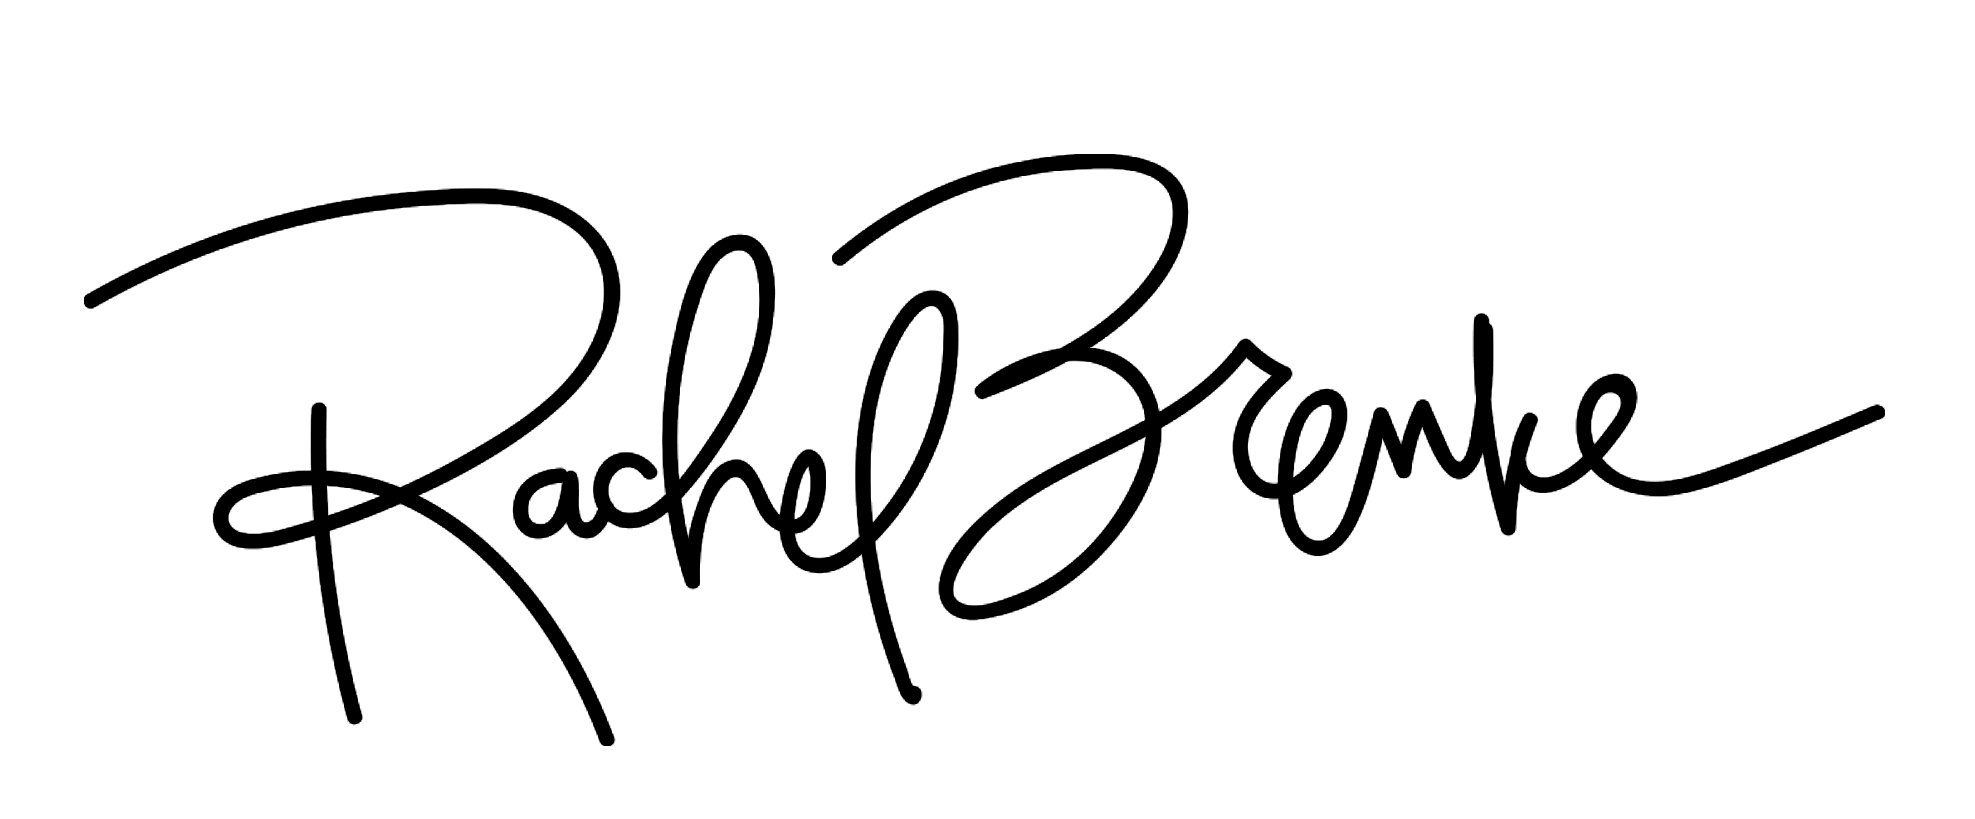 Rachel Logo - Rachel Brenke